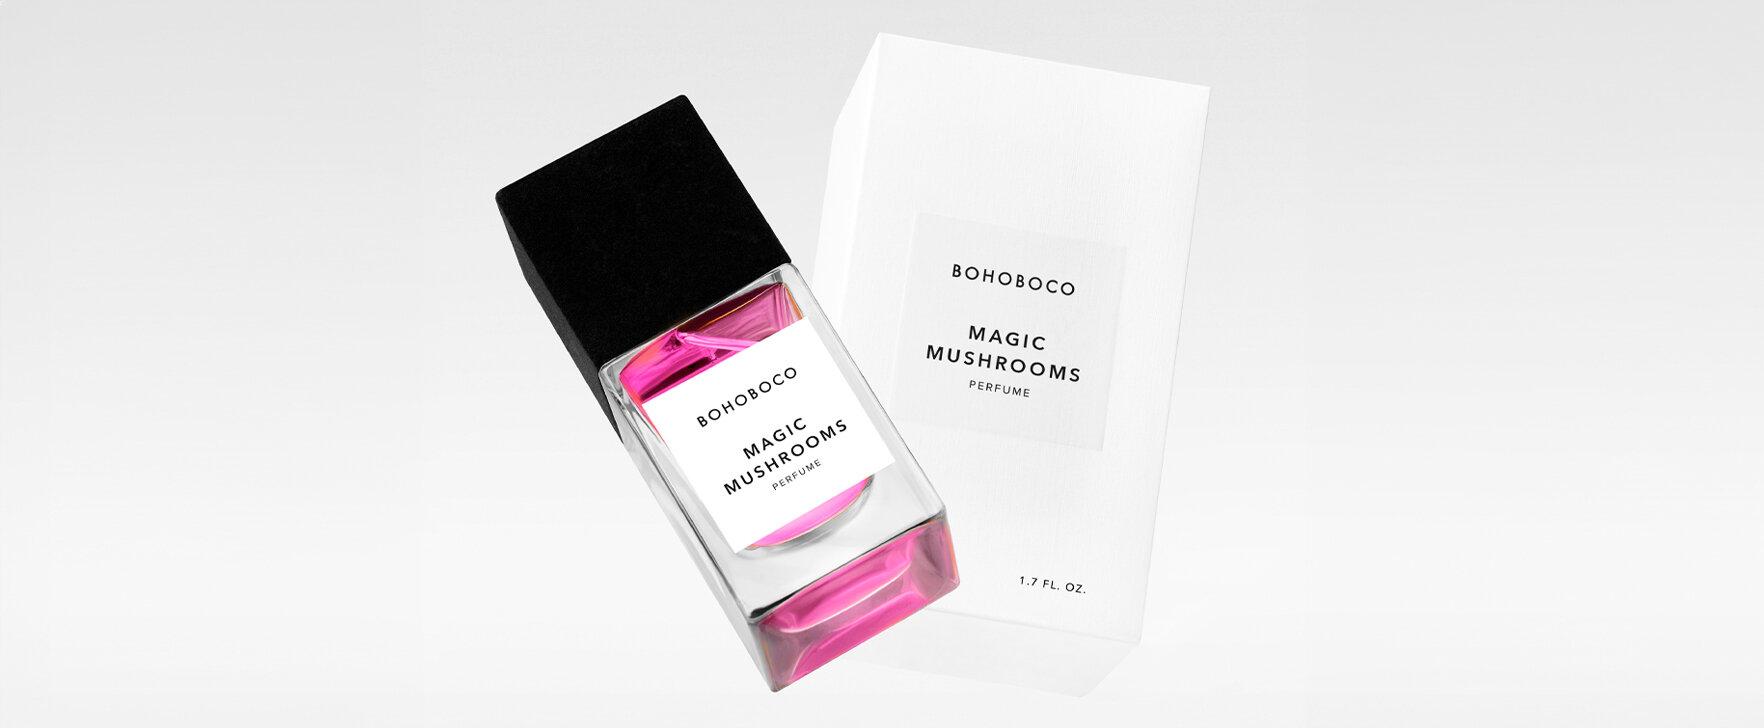 Inspired by Magic: The New "Magic Mushrooms" Perfume From Bohoboco